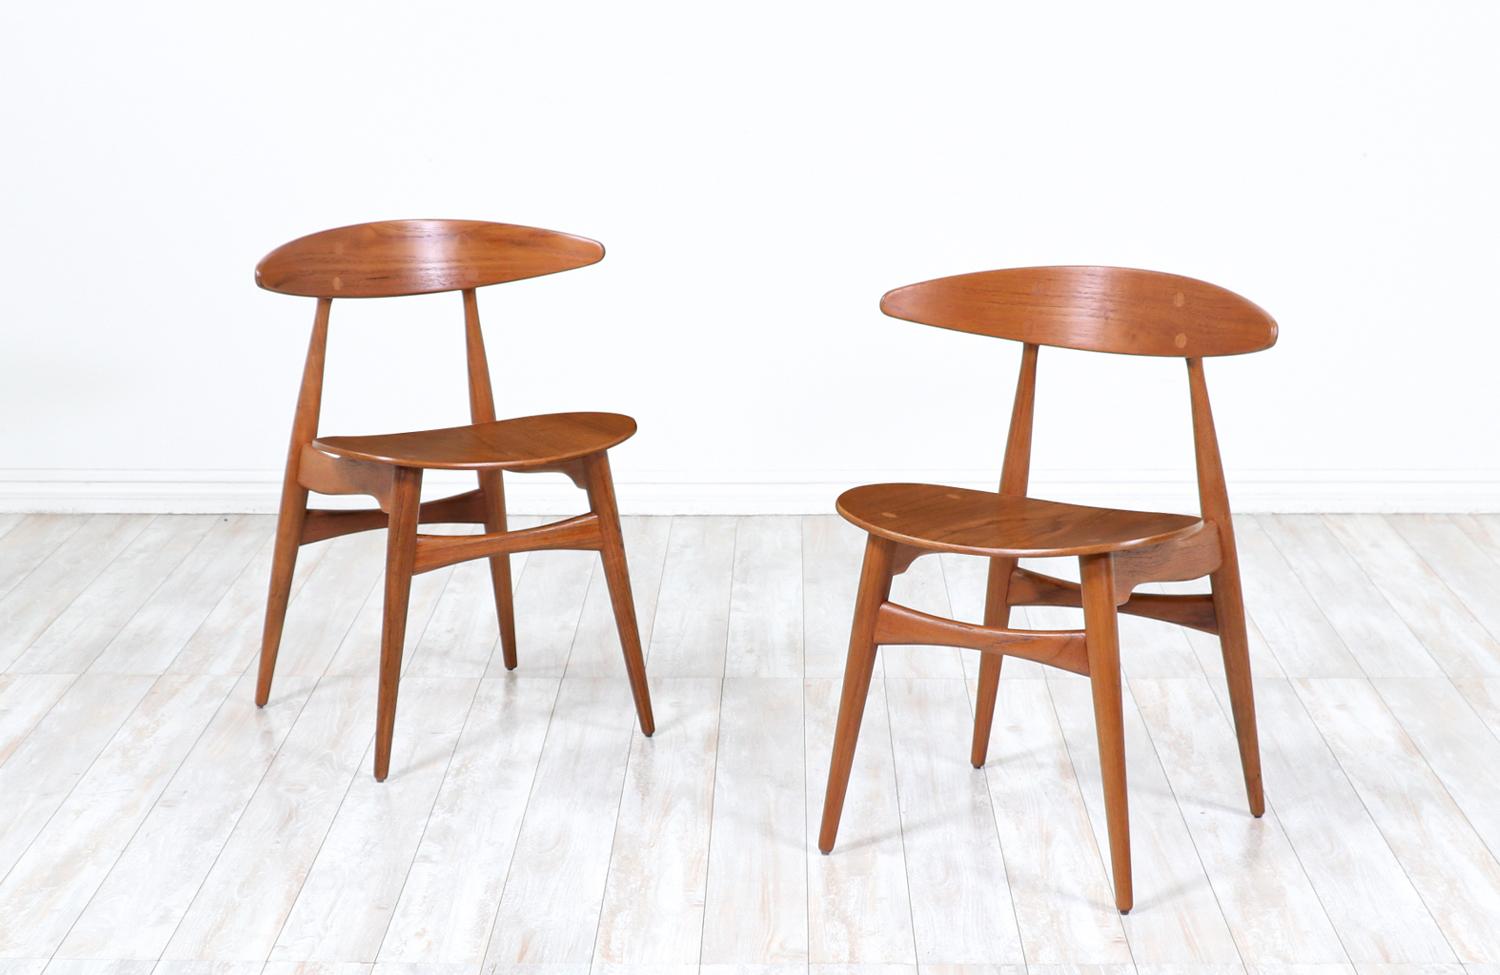 Hans J. Wegner CH-33 teak side chair for Carl Hansen & Søn

Designer
Hans J. Wegner.

______________________________________________________________

Transforming a piece of Mid-Century Modern furniture is like bringing history back to life, and we